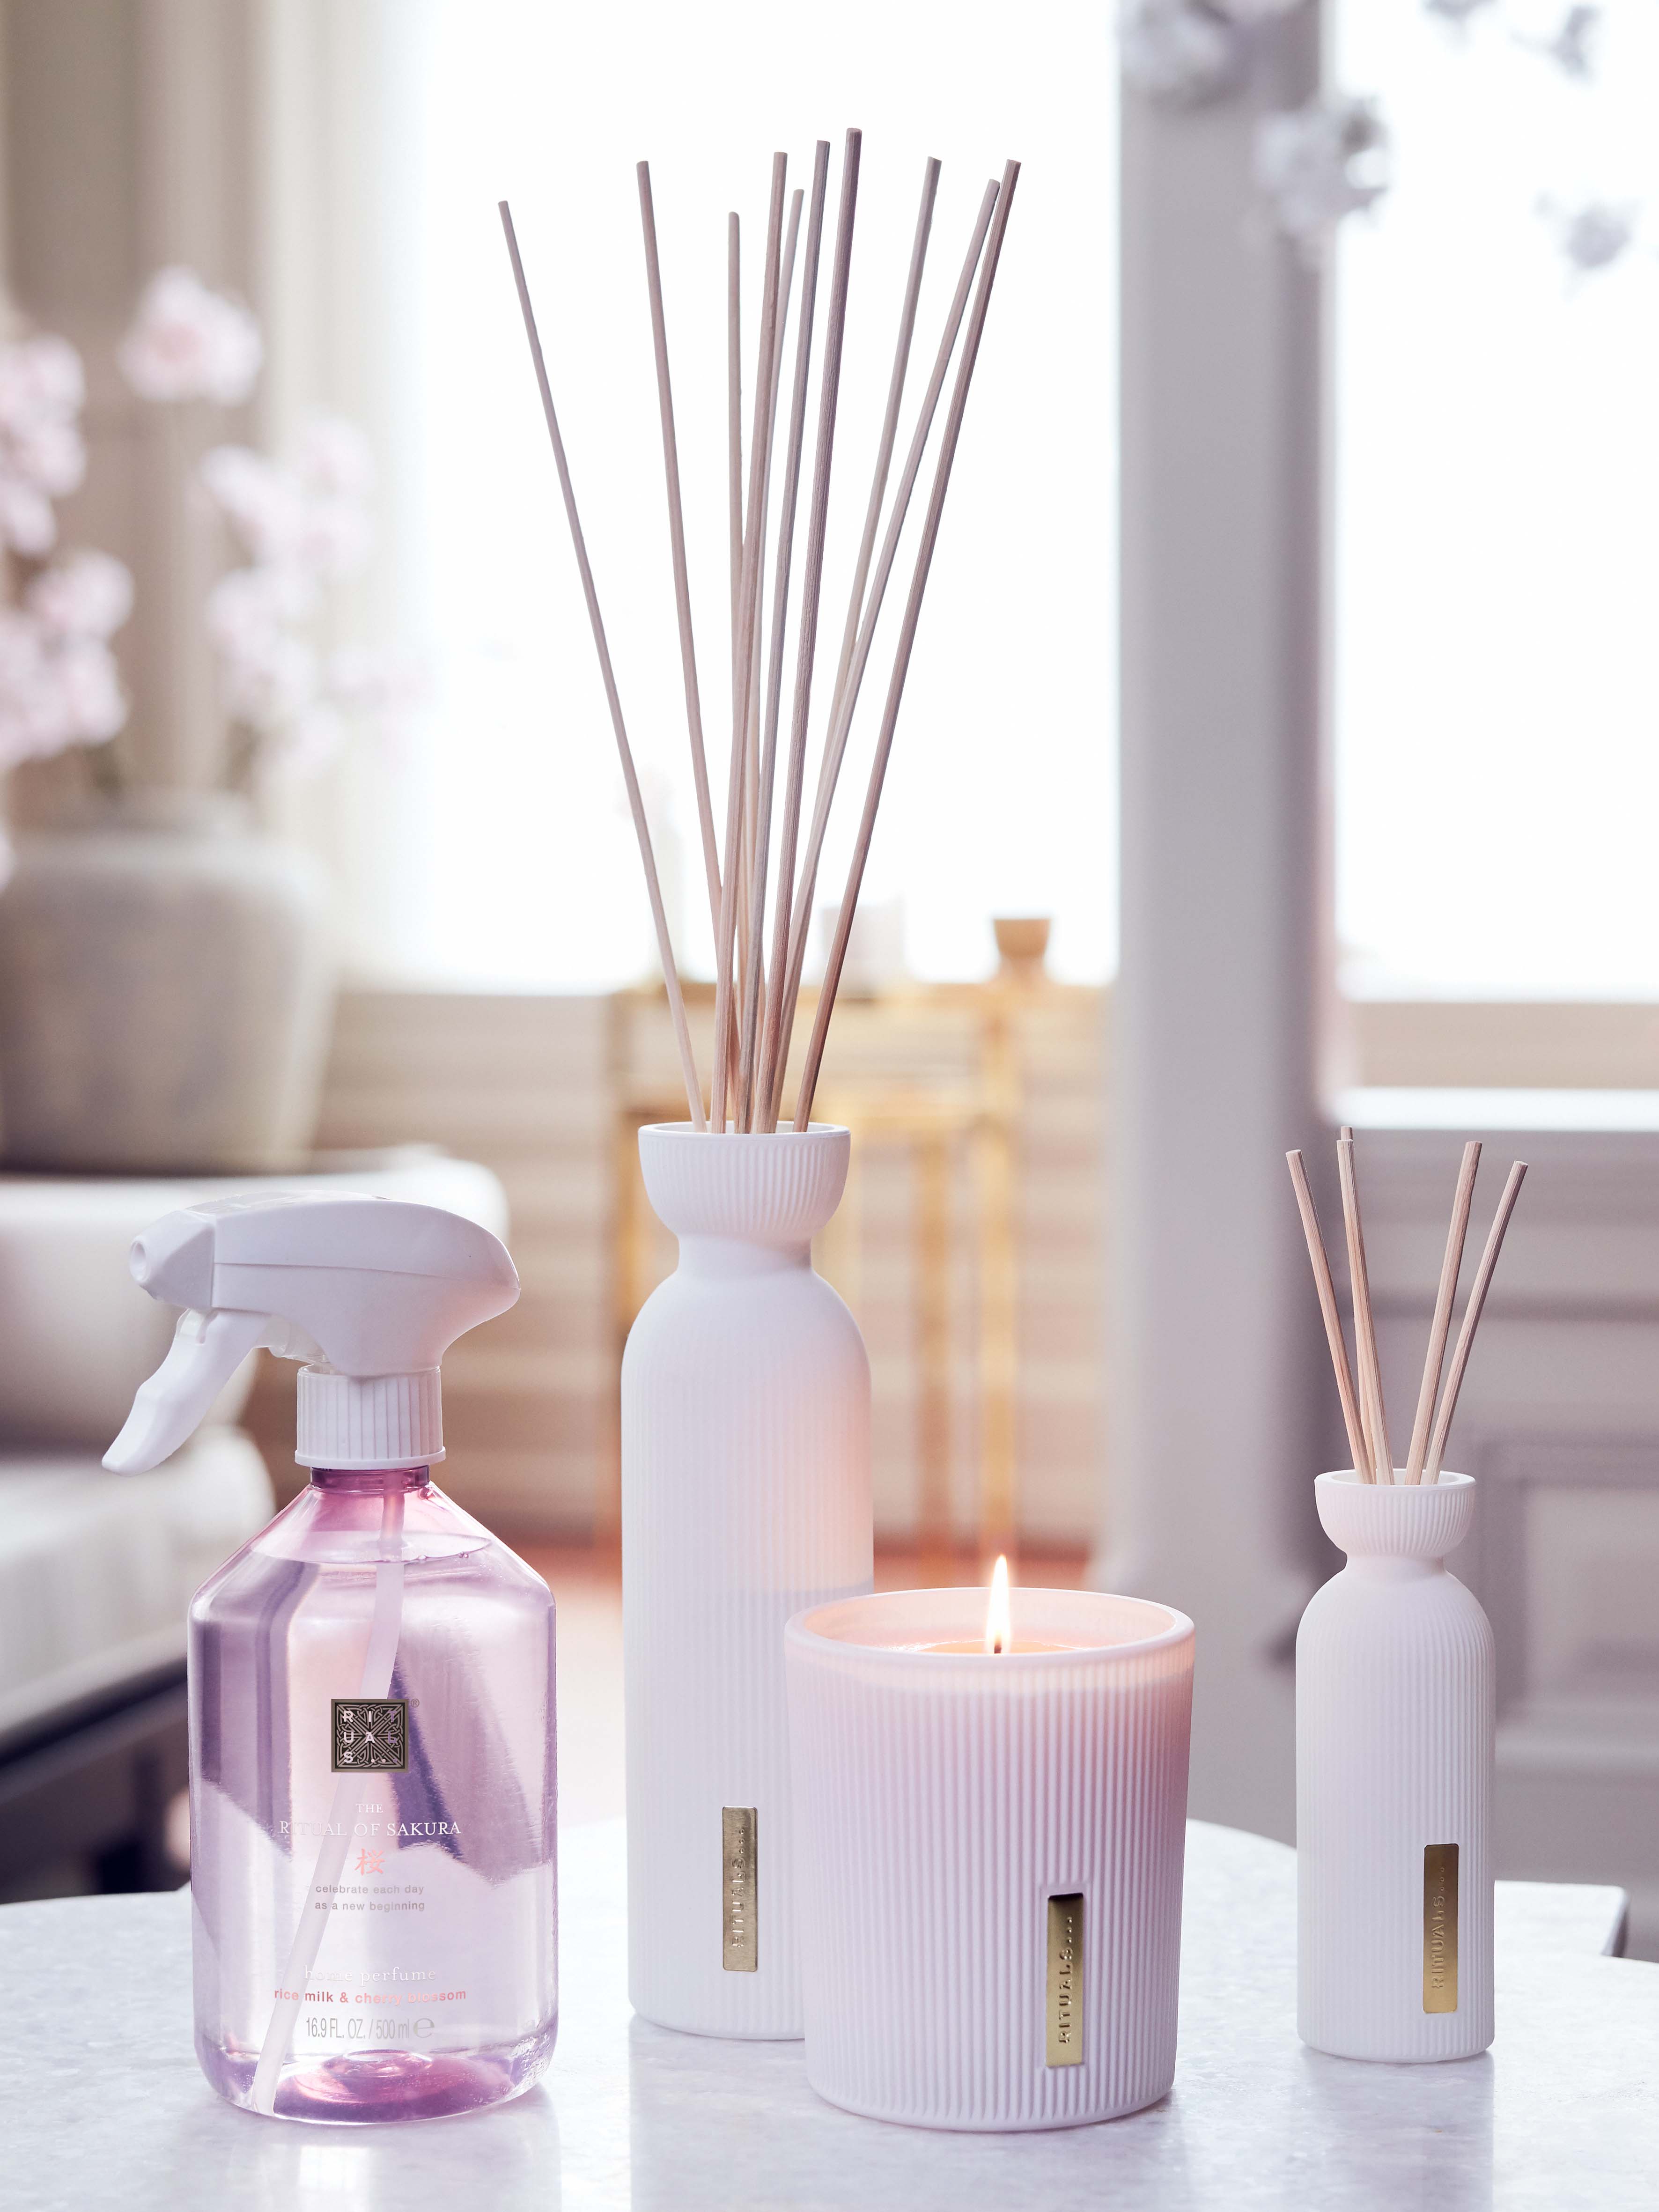 Buy Rituals The Ritual of Karma Home Perfume Spray 500ml from Next